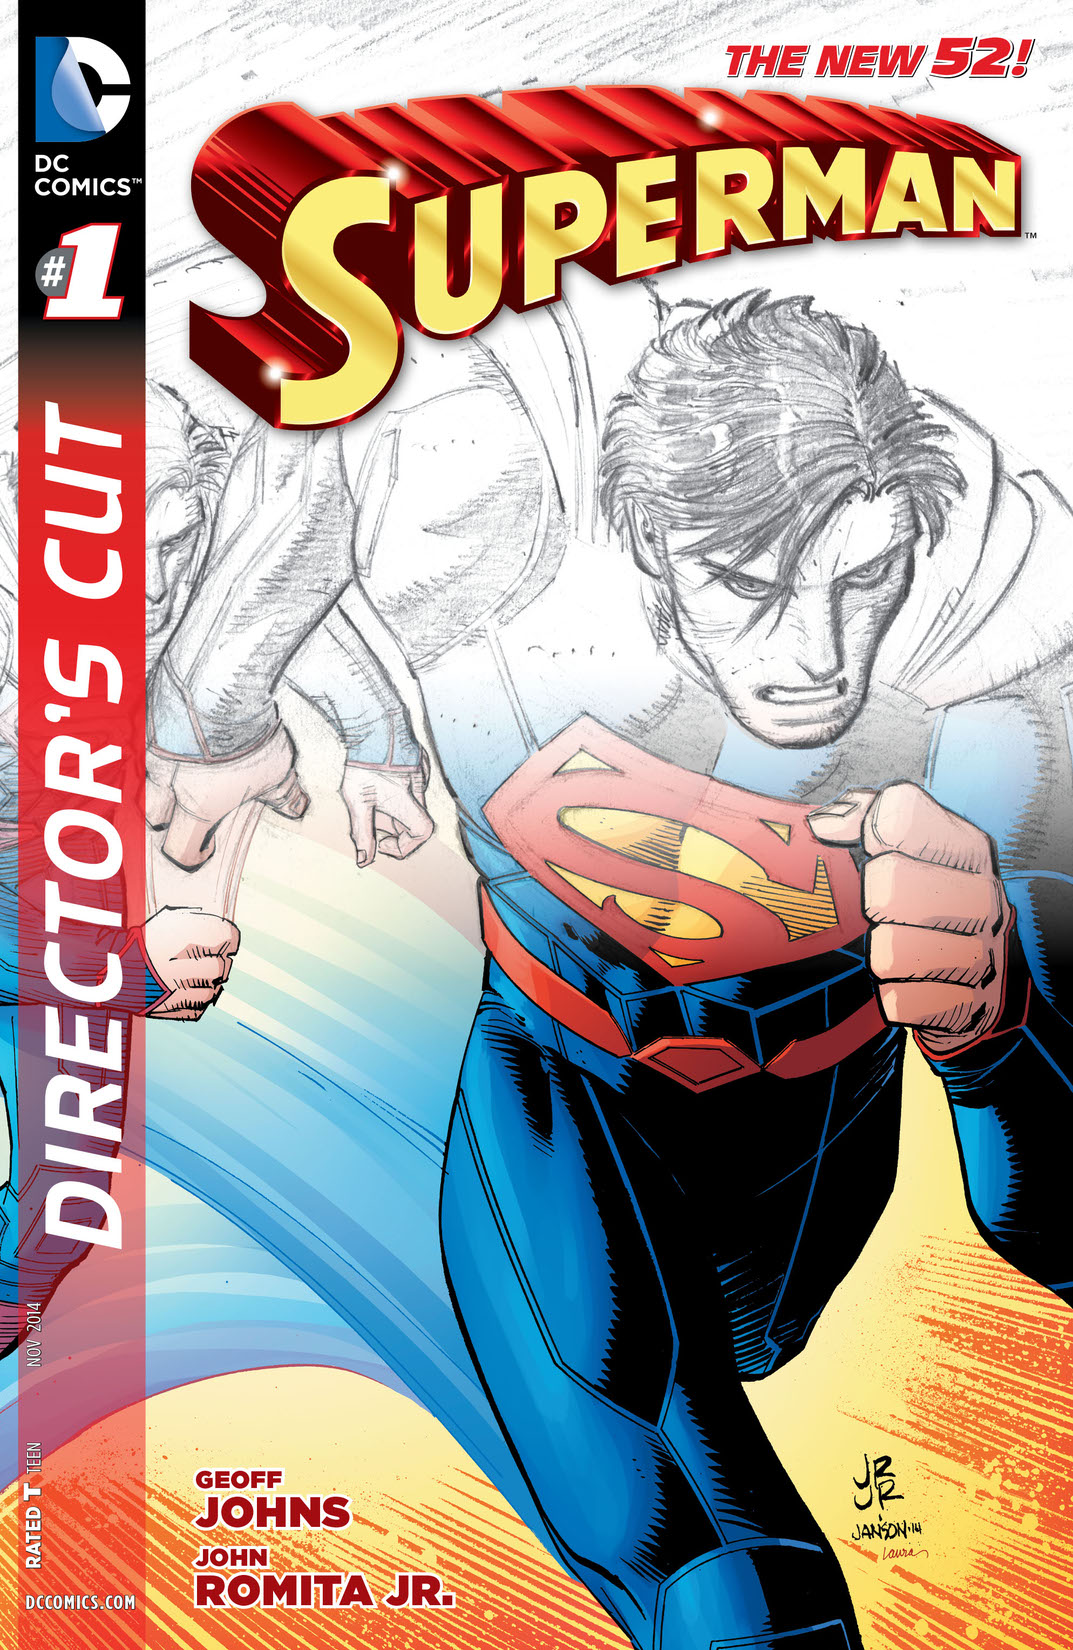 Супер джон. Супермен 2011. Комикс Джон. Ромита младший. Geoff Johns Superboy.